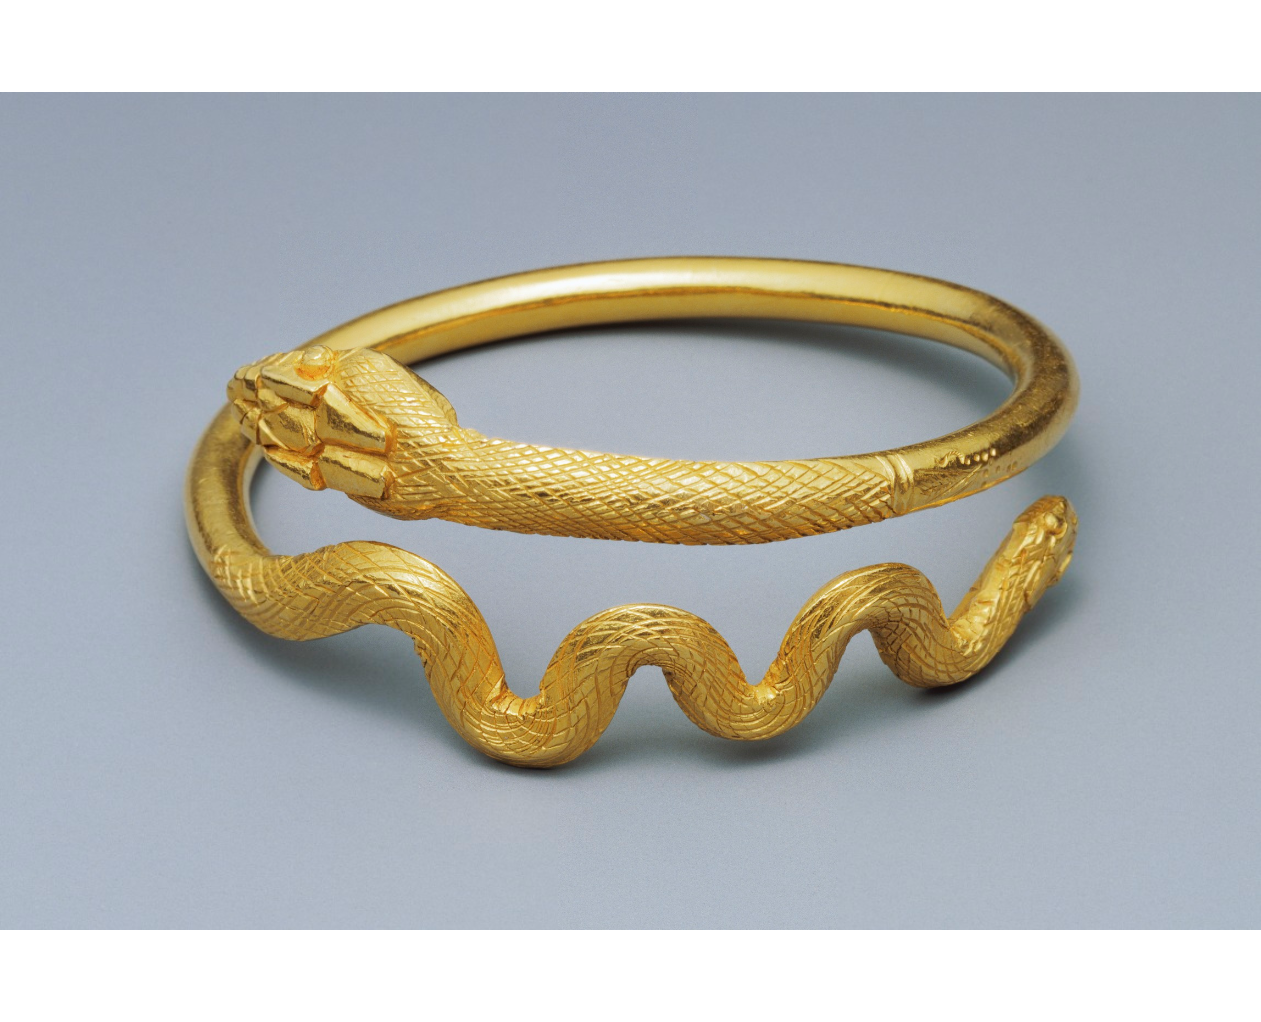 Double headed snake bracelet made from gold. Roman Egypt, 1st century A.D. [1261x1022] : r/ArtefactPorn